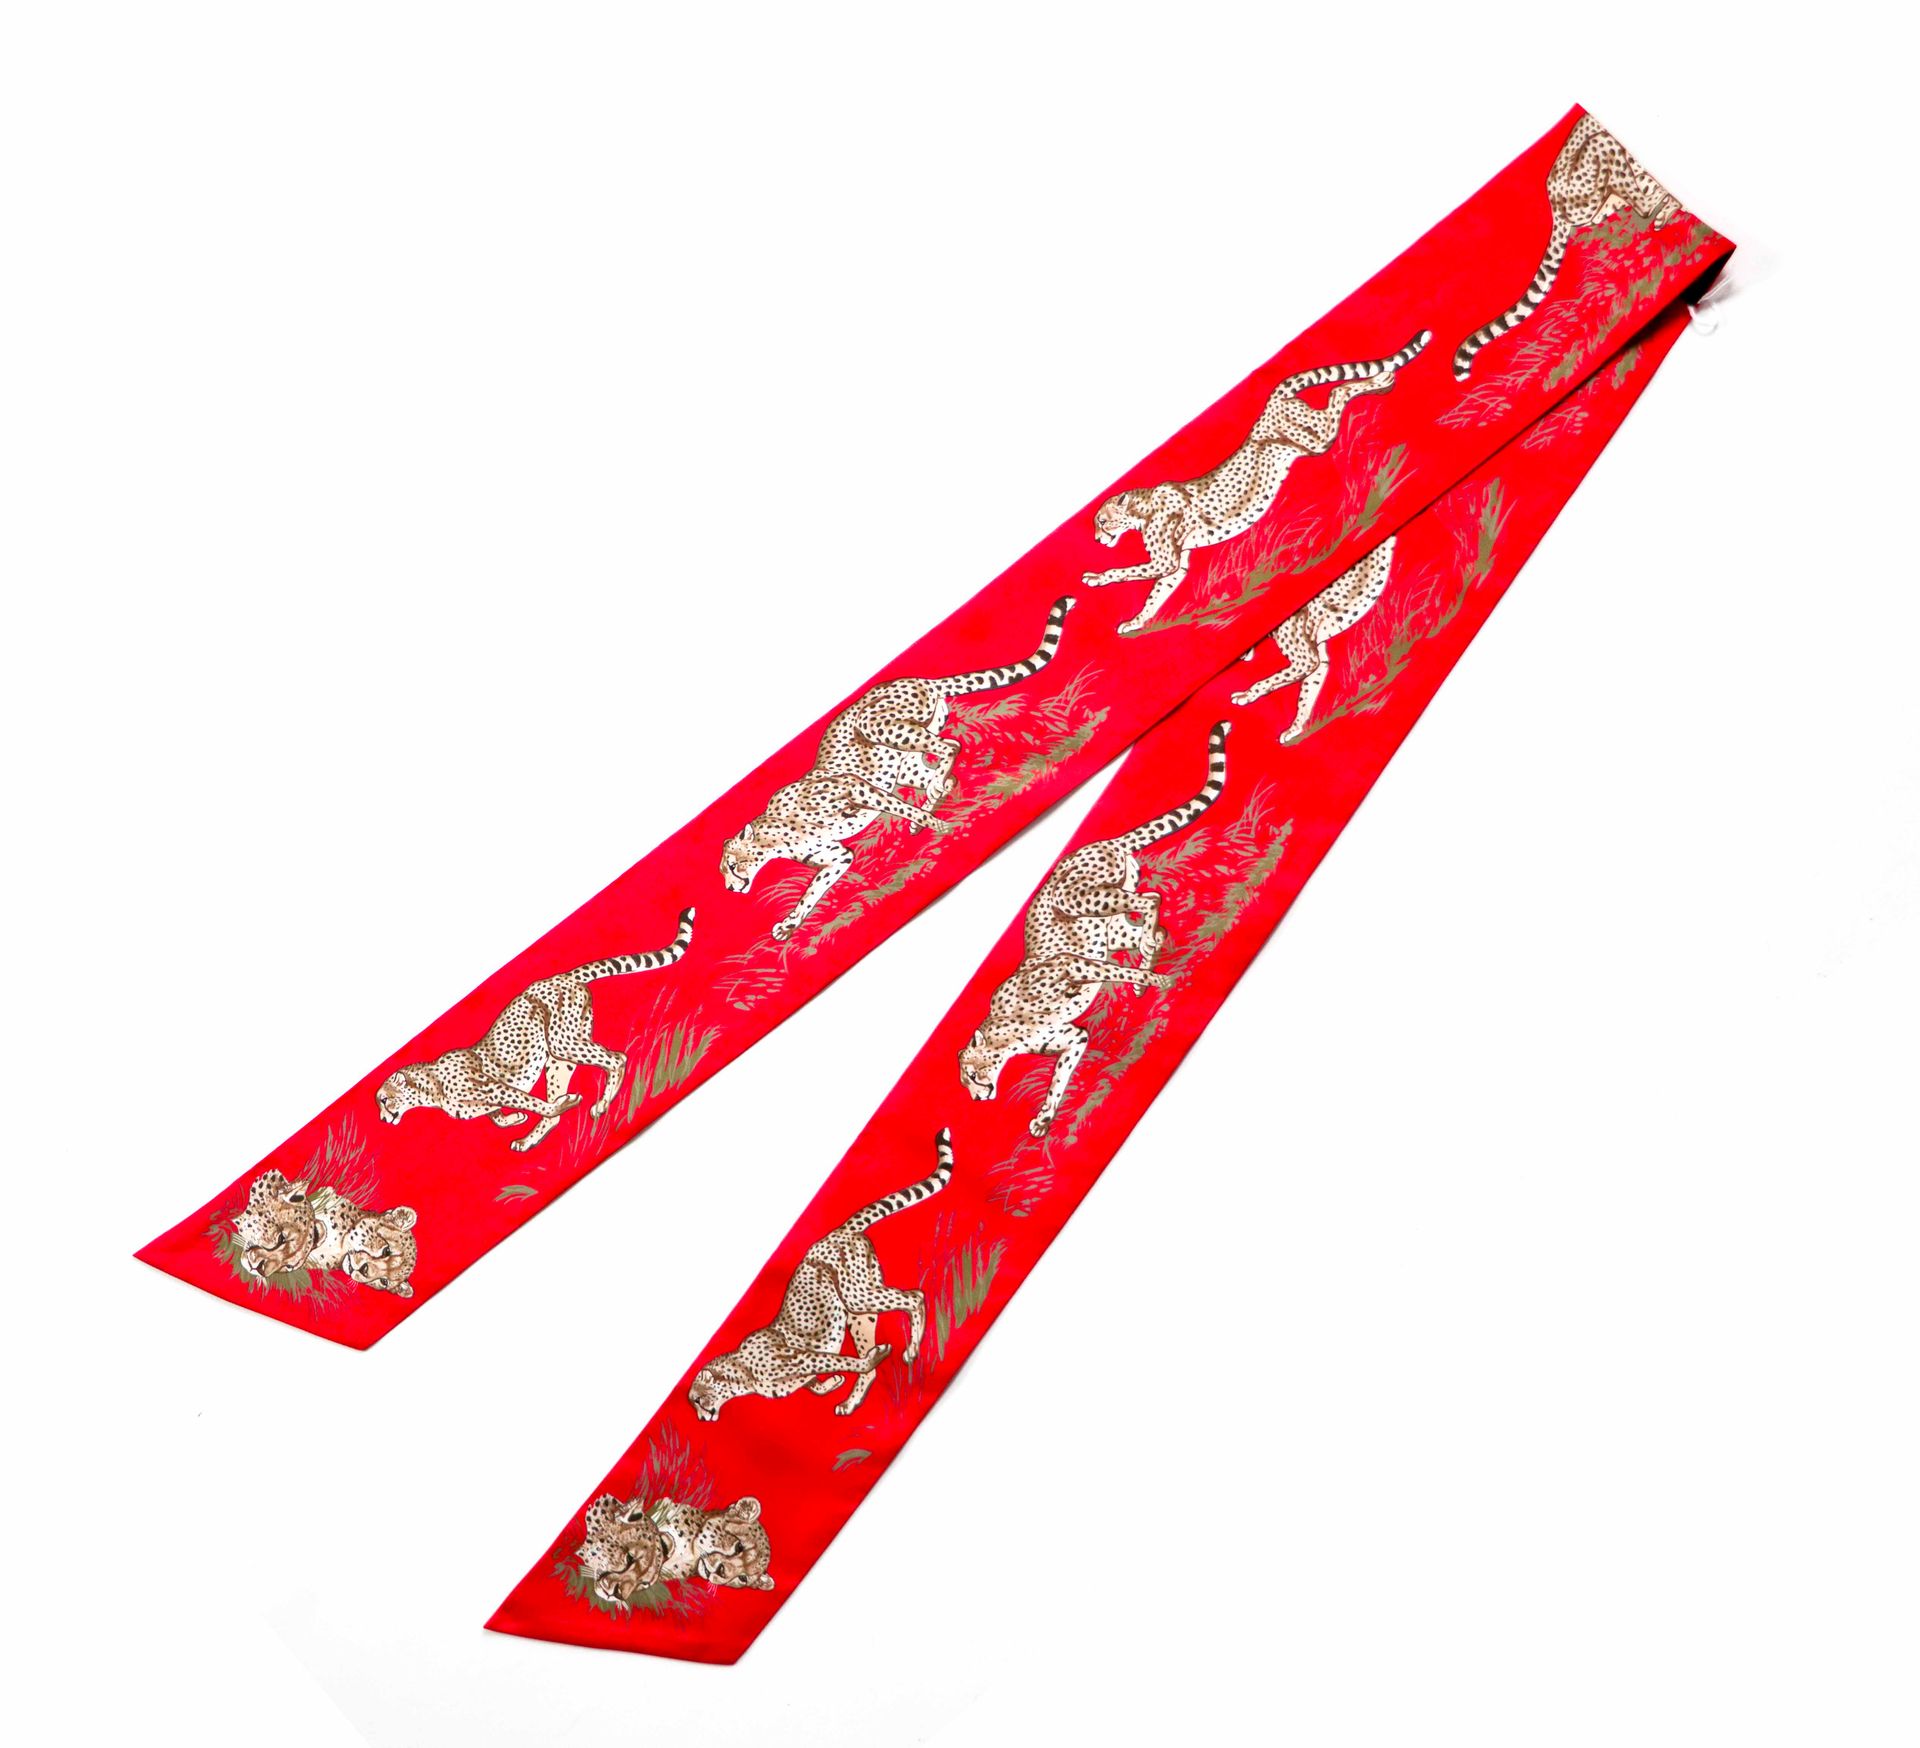 Null 赫米斯。Maxi -Twilly纤细的多色丝绸，在红色背景上装饰有黑豹。